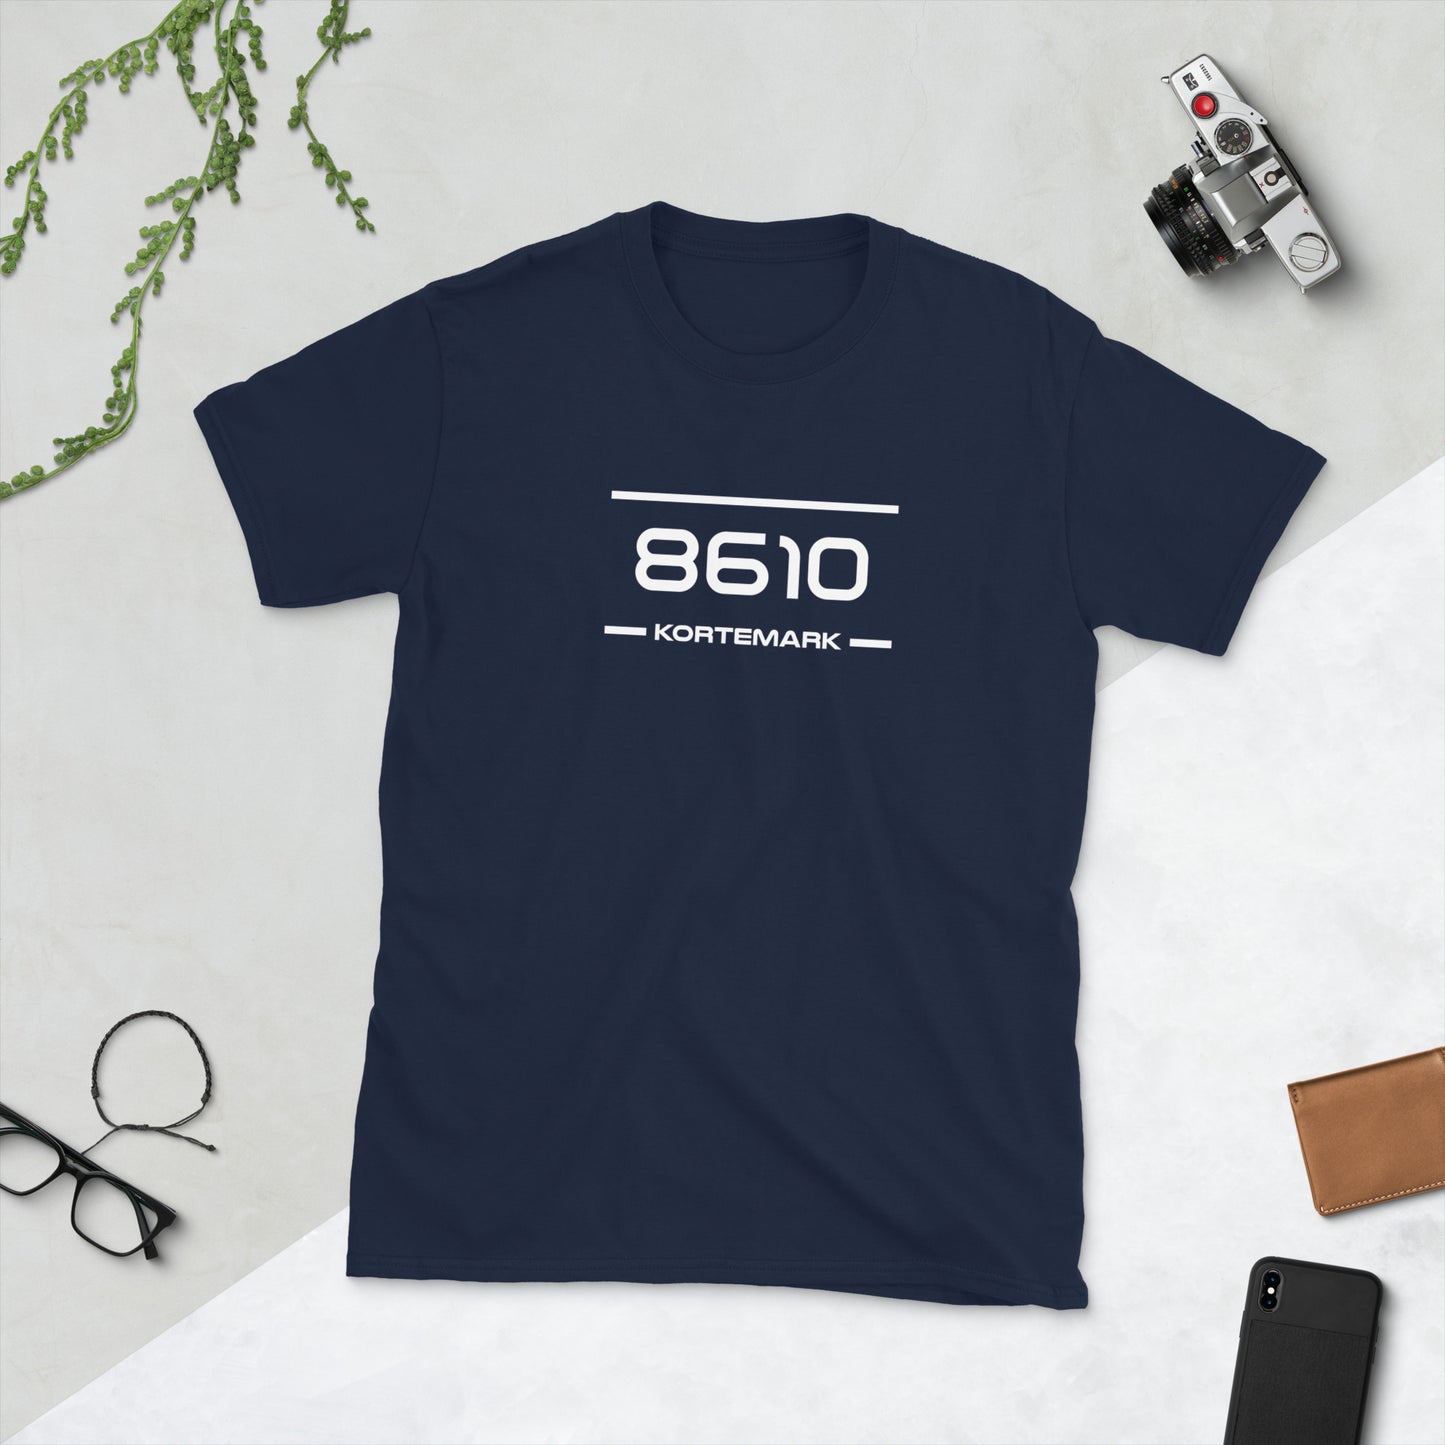 Tshirt - 8610 - Kortemark